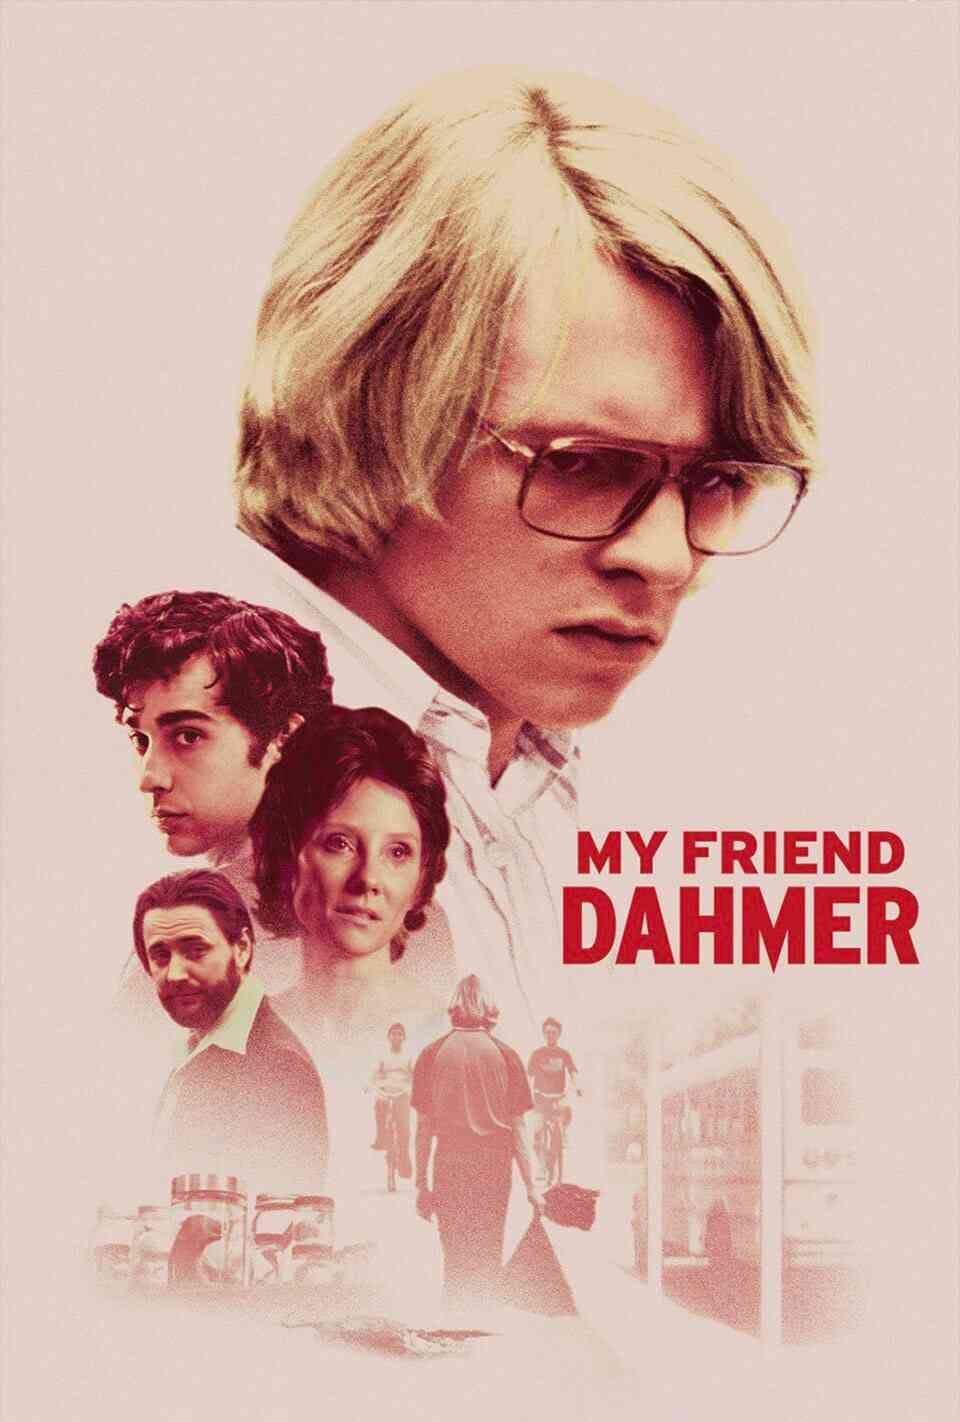 Read My Friend Dahmer screenplay (poster)